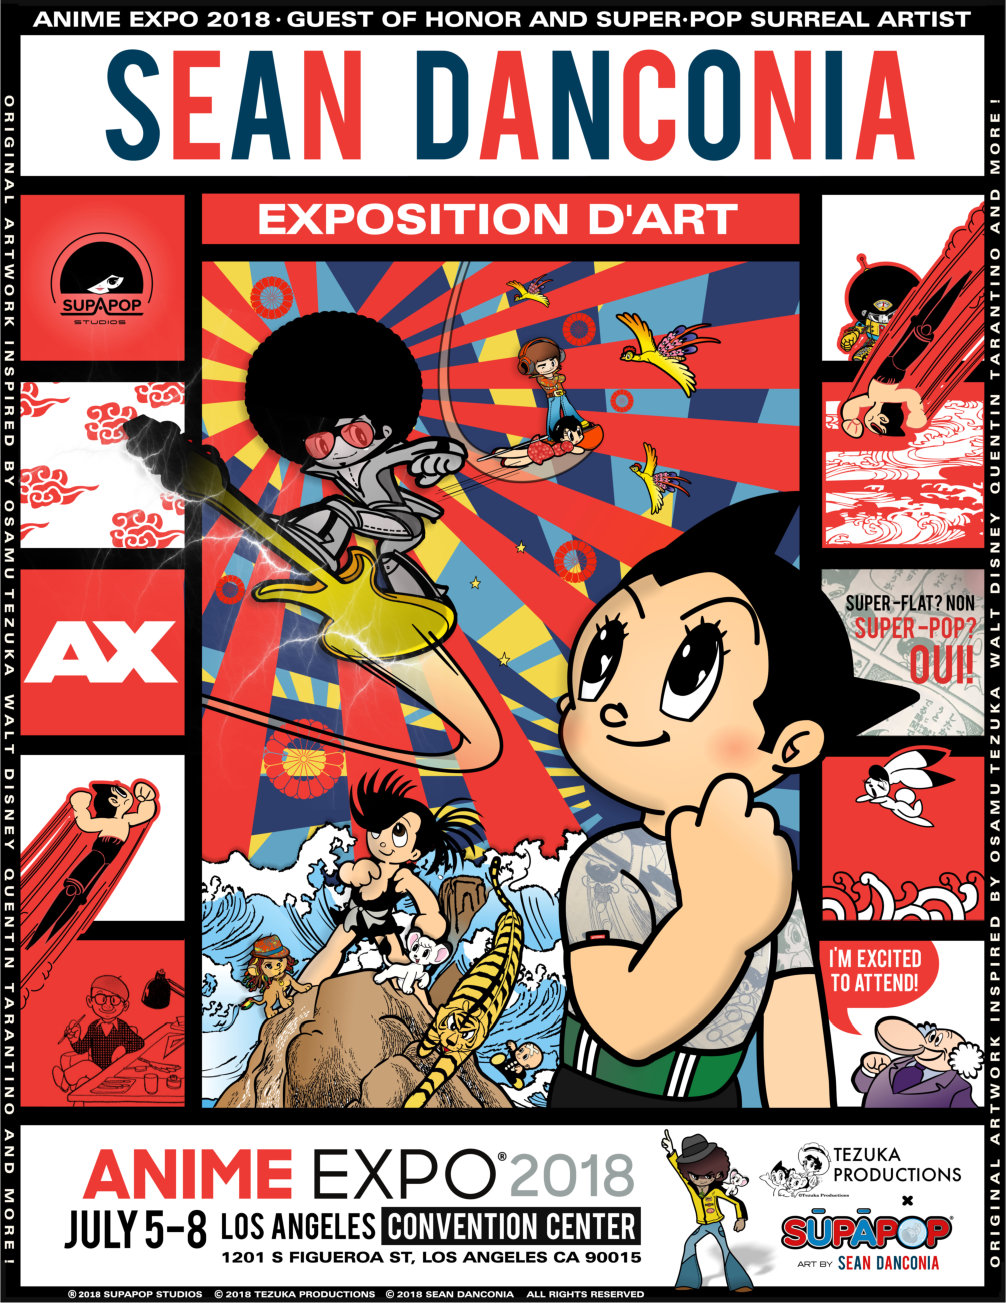 Anime Expo 2015 Premier